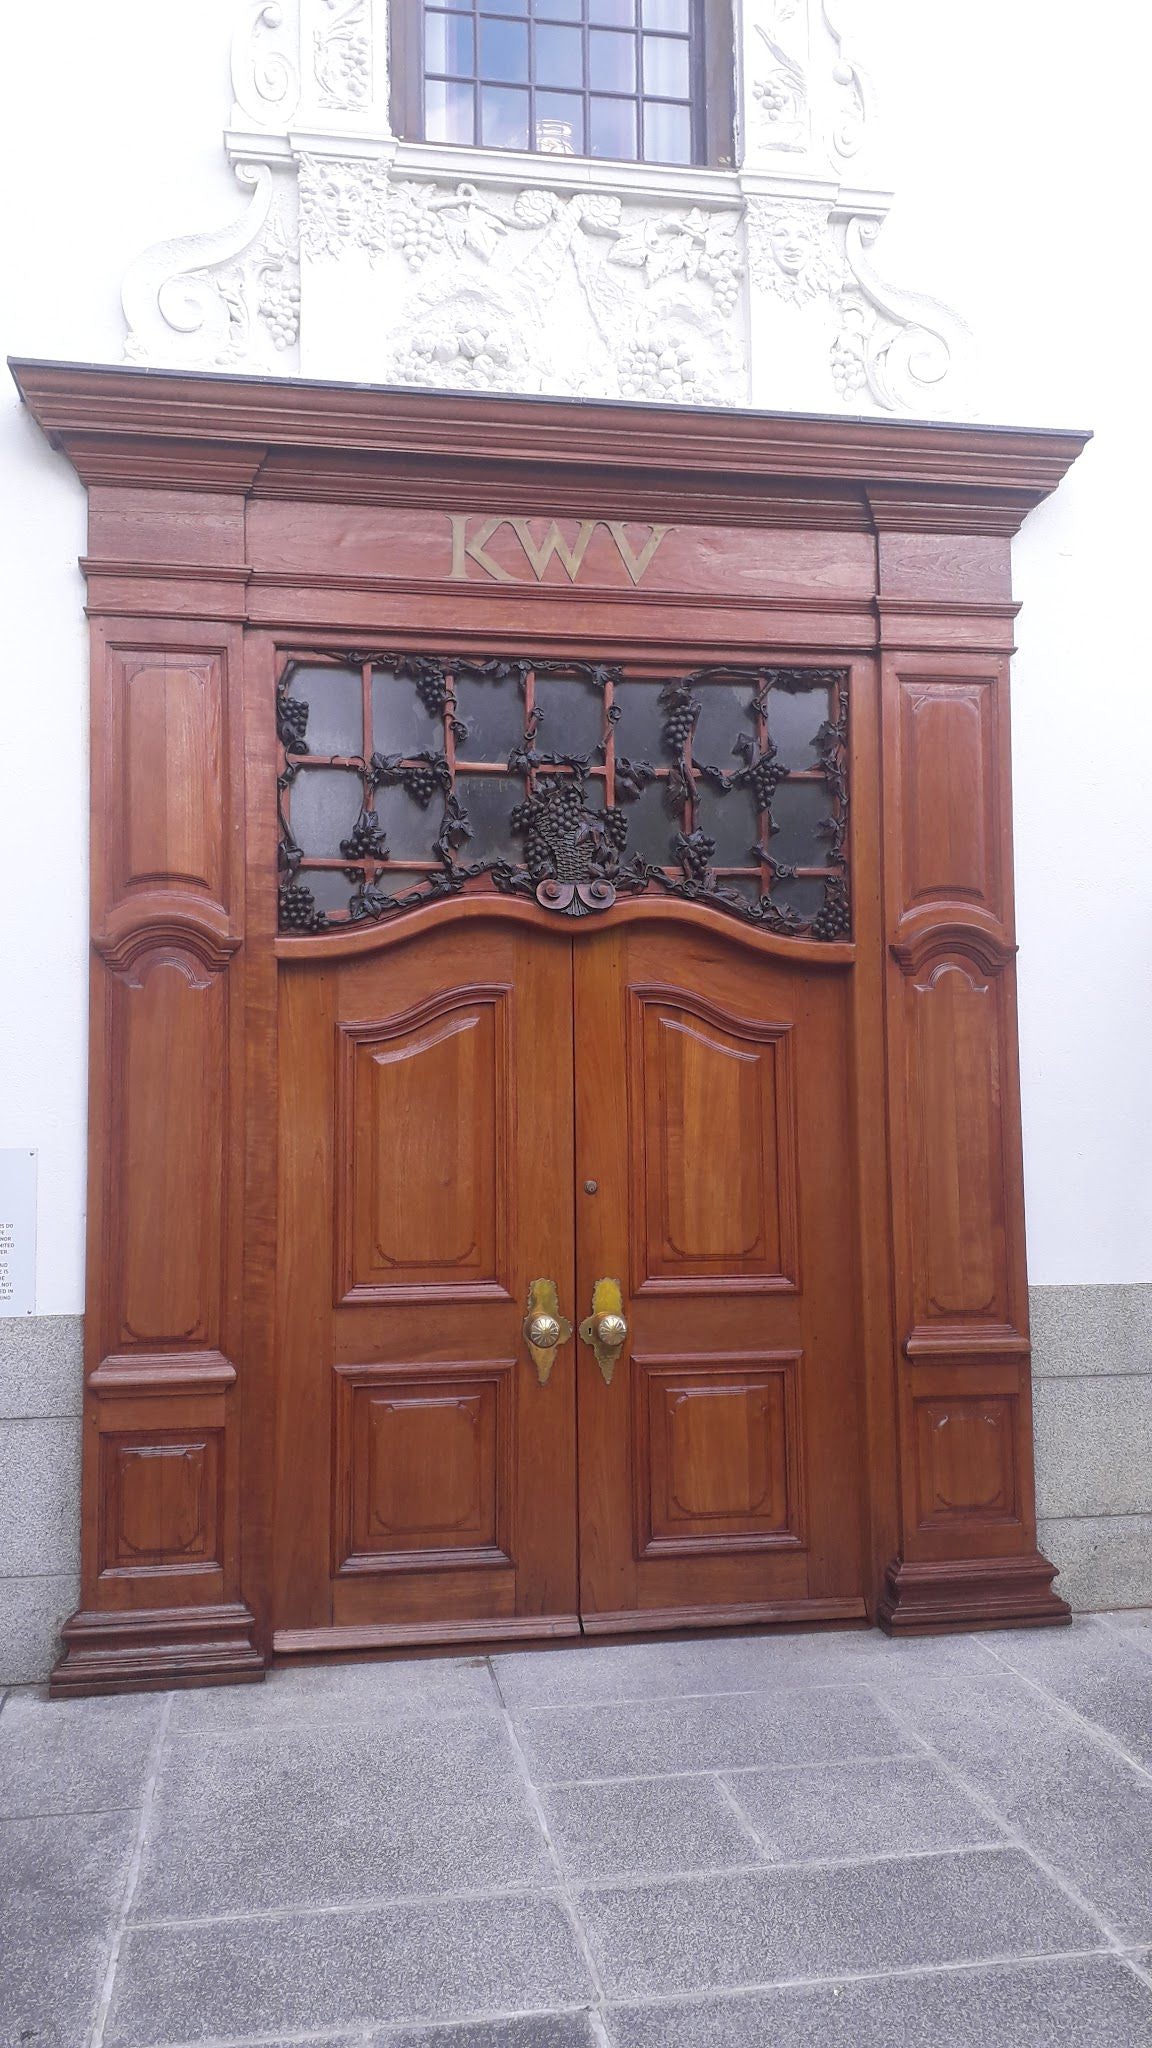  Kwv South Africa (Pty) Ltd